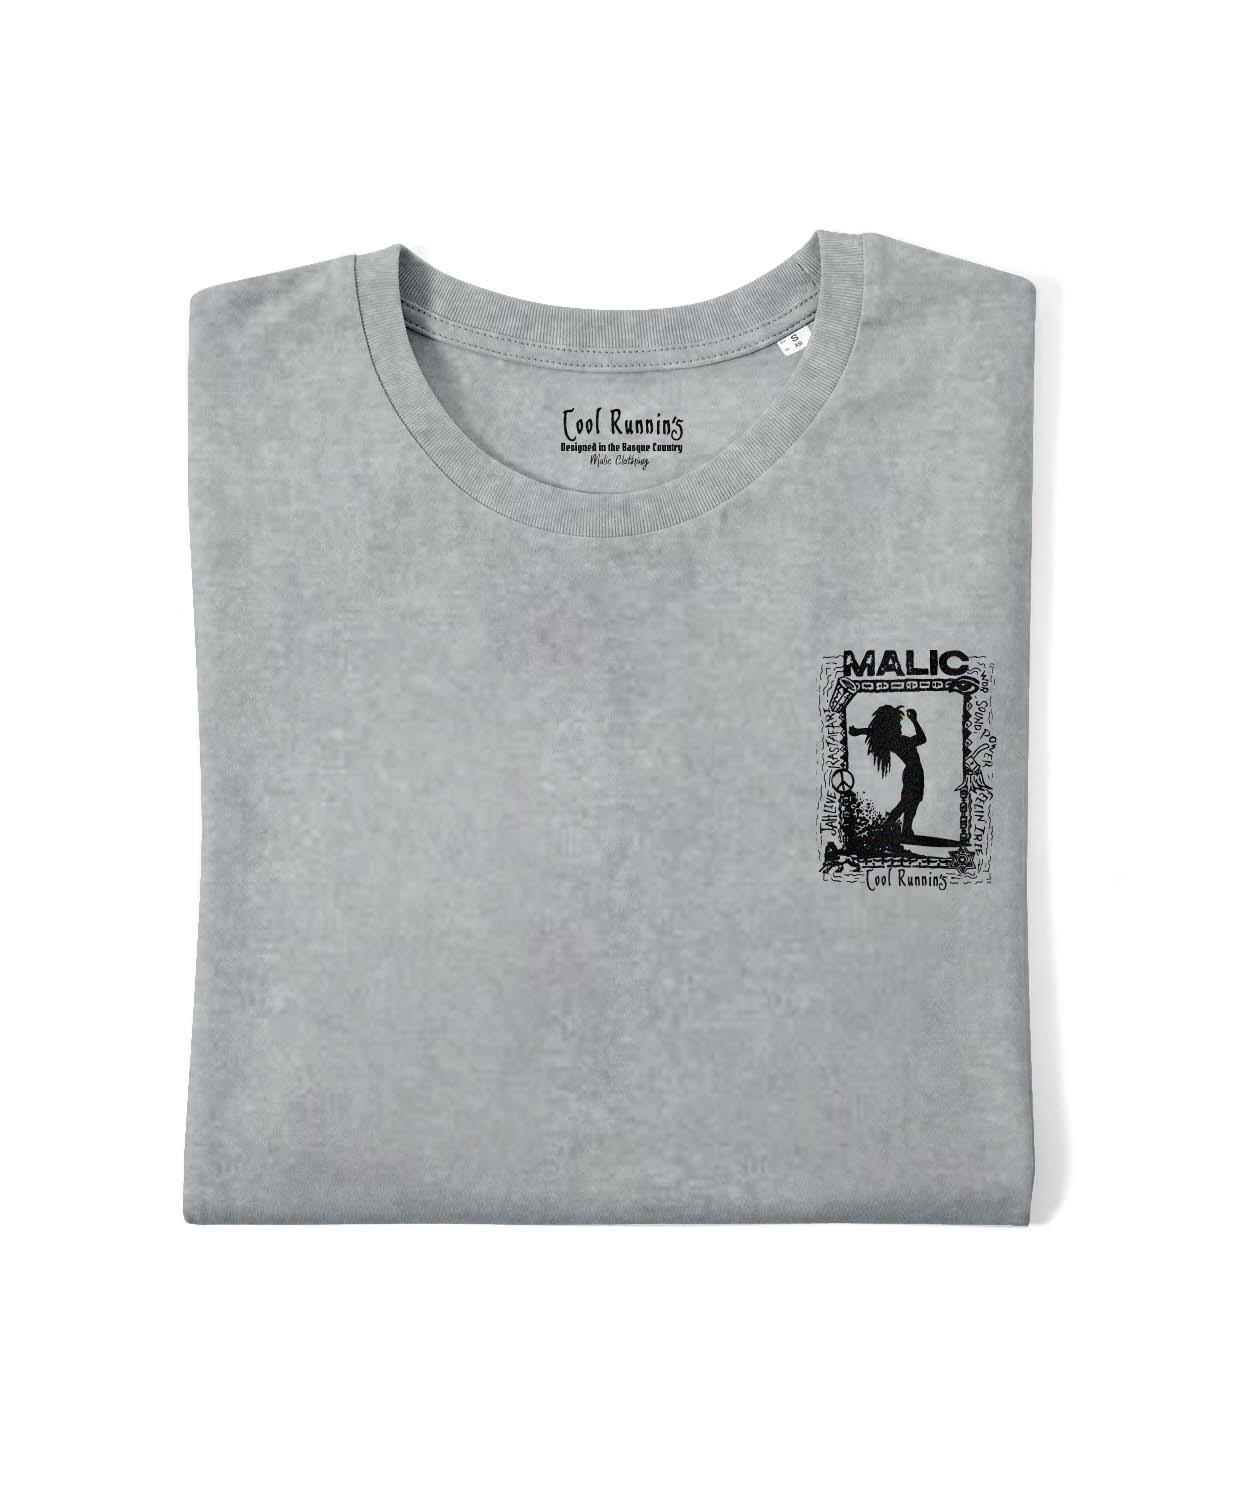 Camiseta COOL RUNNIN'S gris vintage